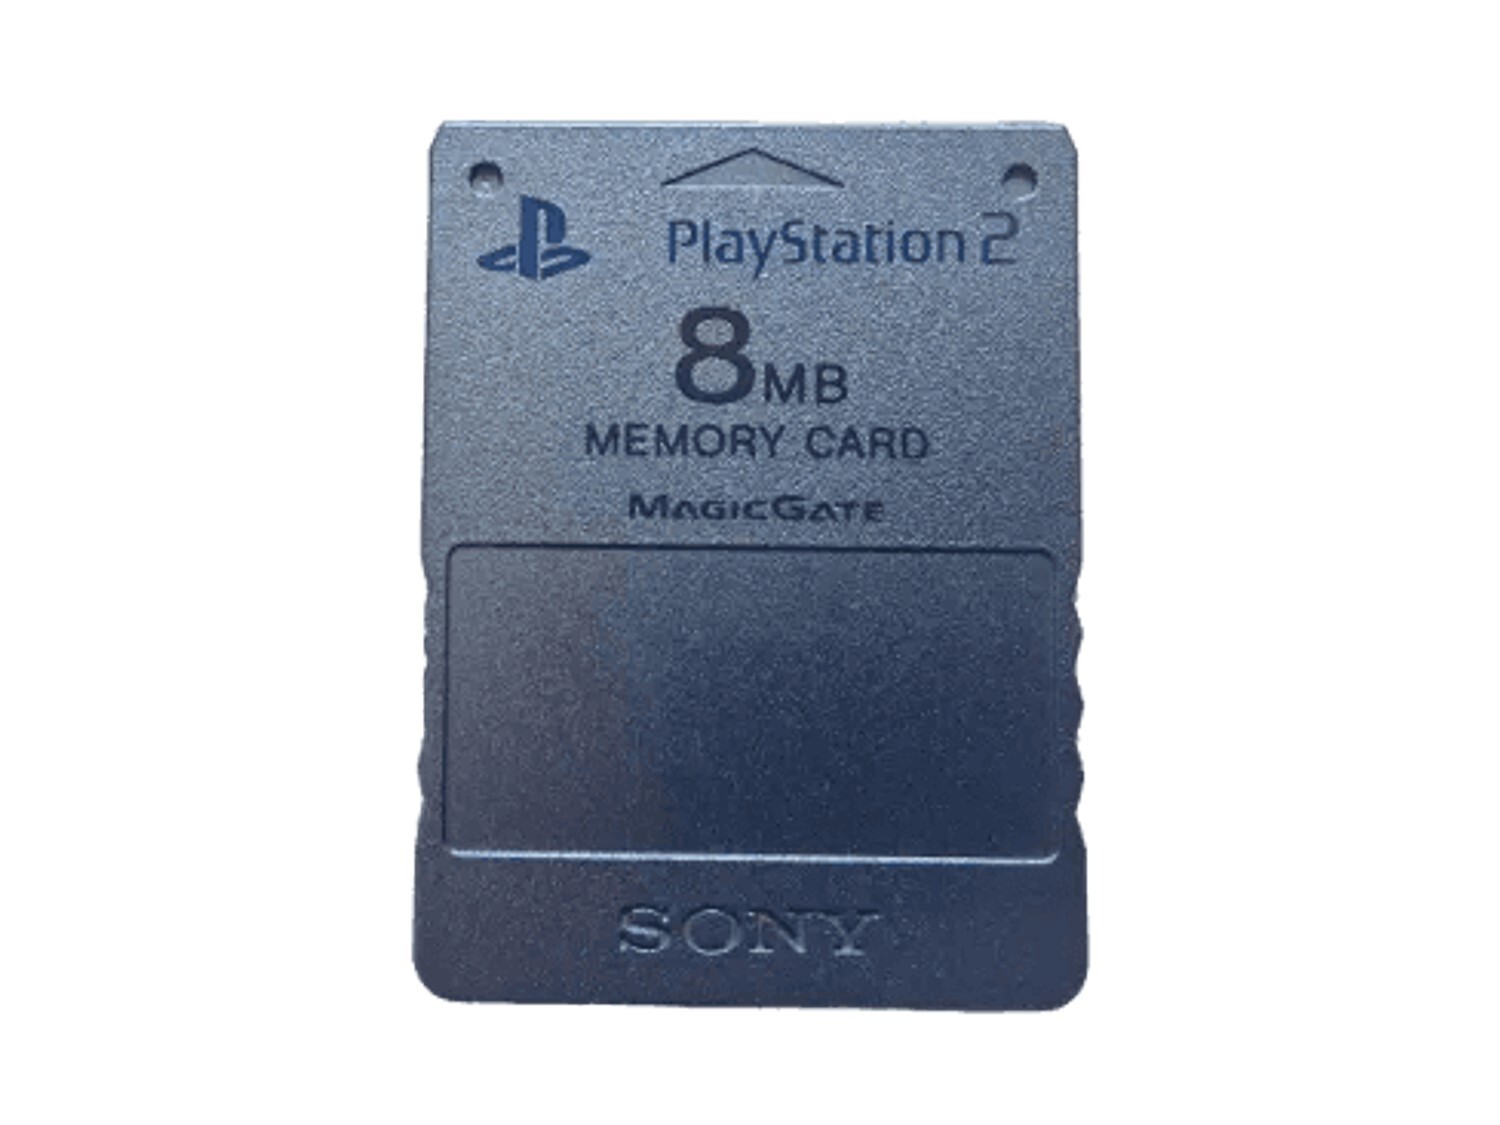 Originele PlayStation 2 Memory Card - Aqua Bue (8MB) Kopen | Playstation 2 Hardware